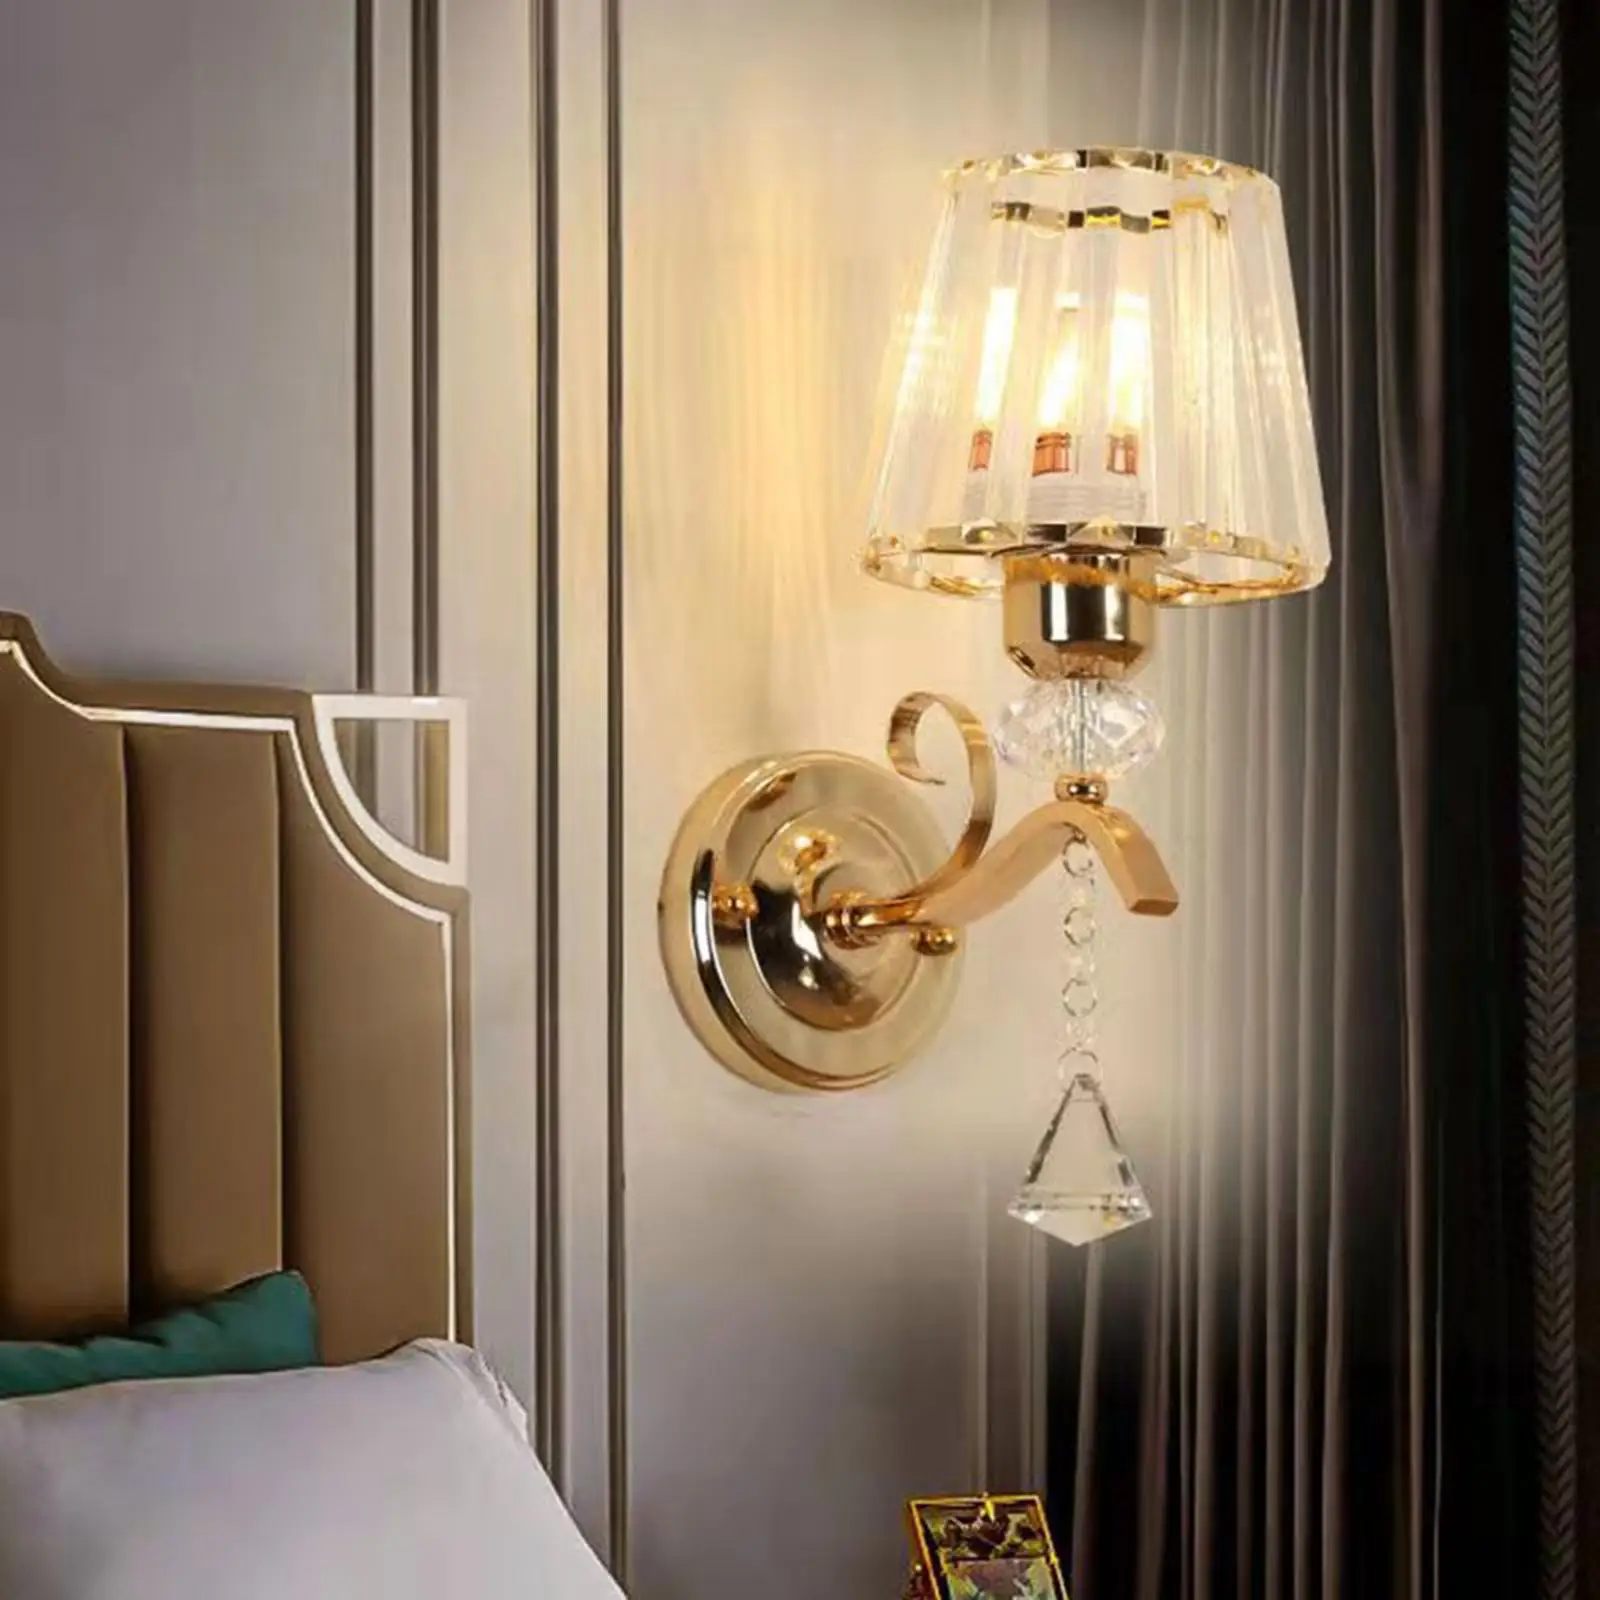 Modern LED Wall Light Sconce Light Fixtures Wall Mount Night Lamp for Bedside Corridor Lighting,Doorway Hallway Decoration